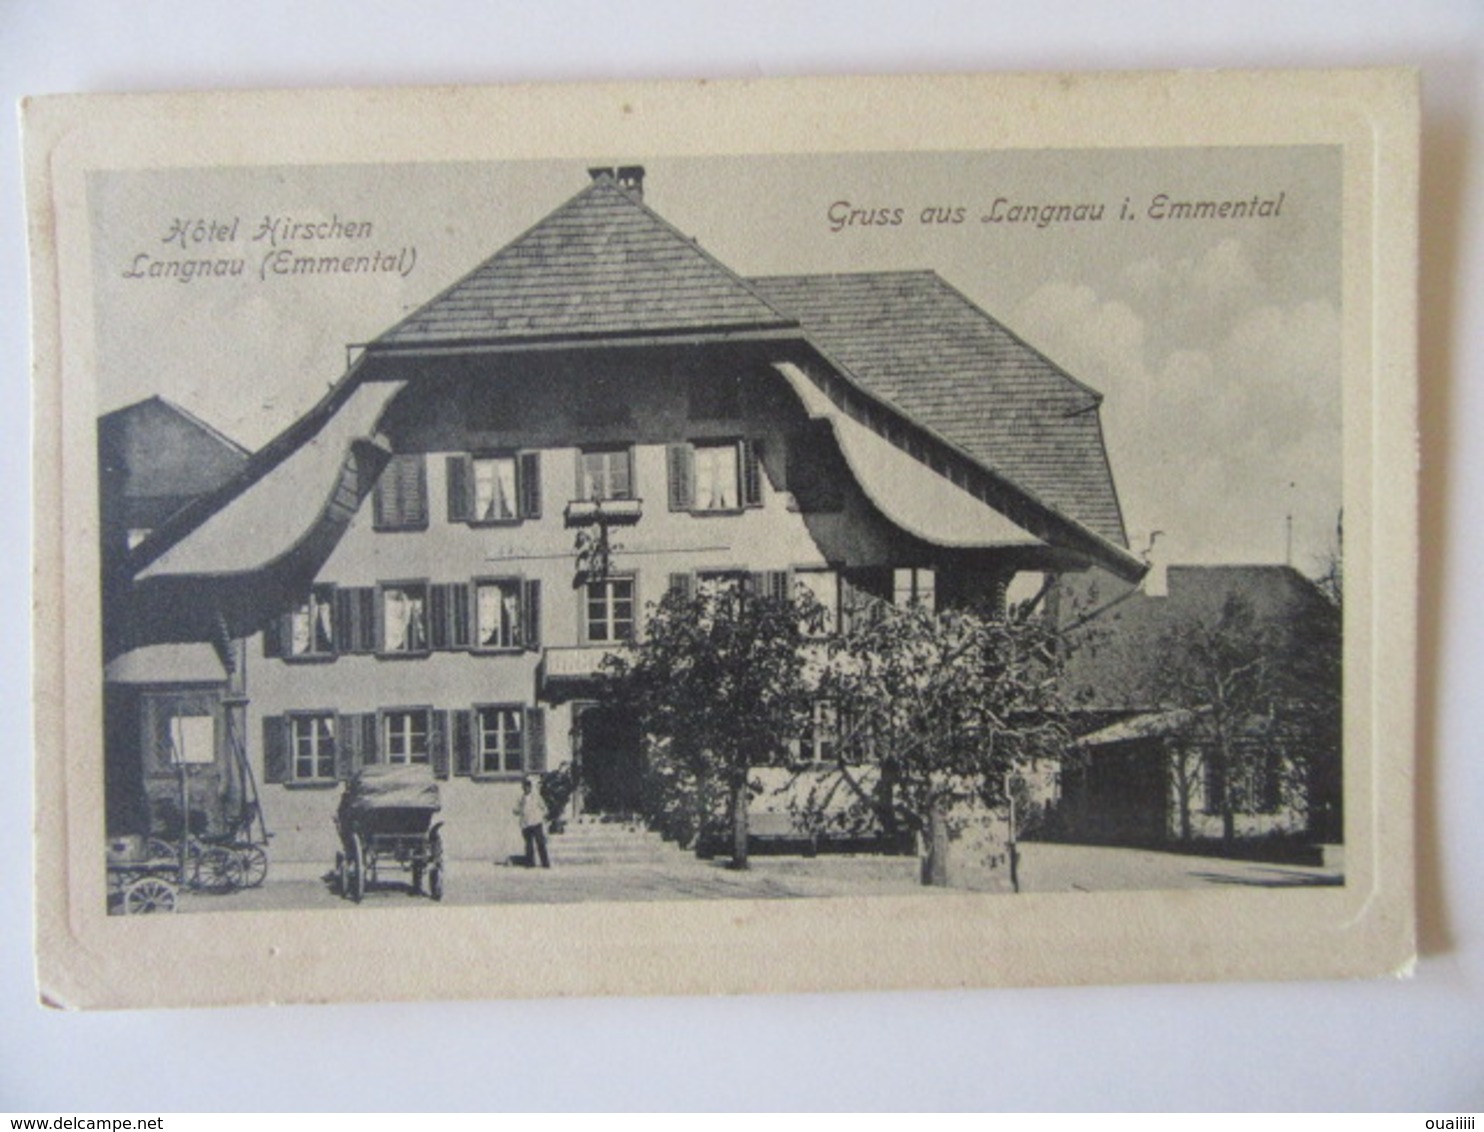 CPA, Trés Belle Vue Animée, Hôtel Hirschen, Langnau (Emmental), Gruss Aus Langnau I. Emmental - Langnau Im Emmental